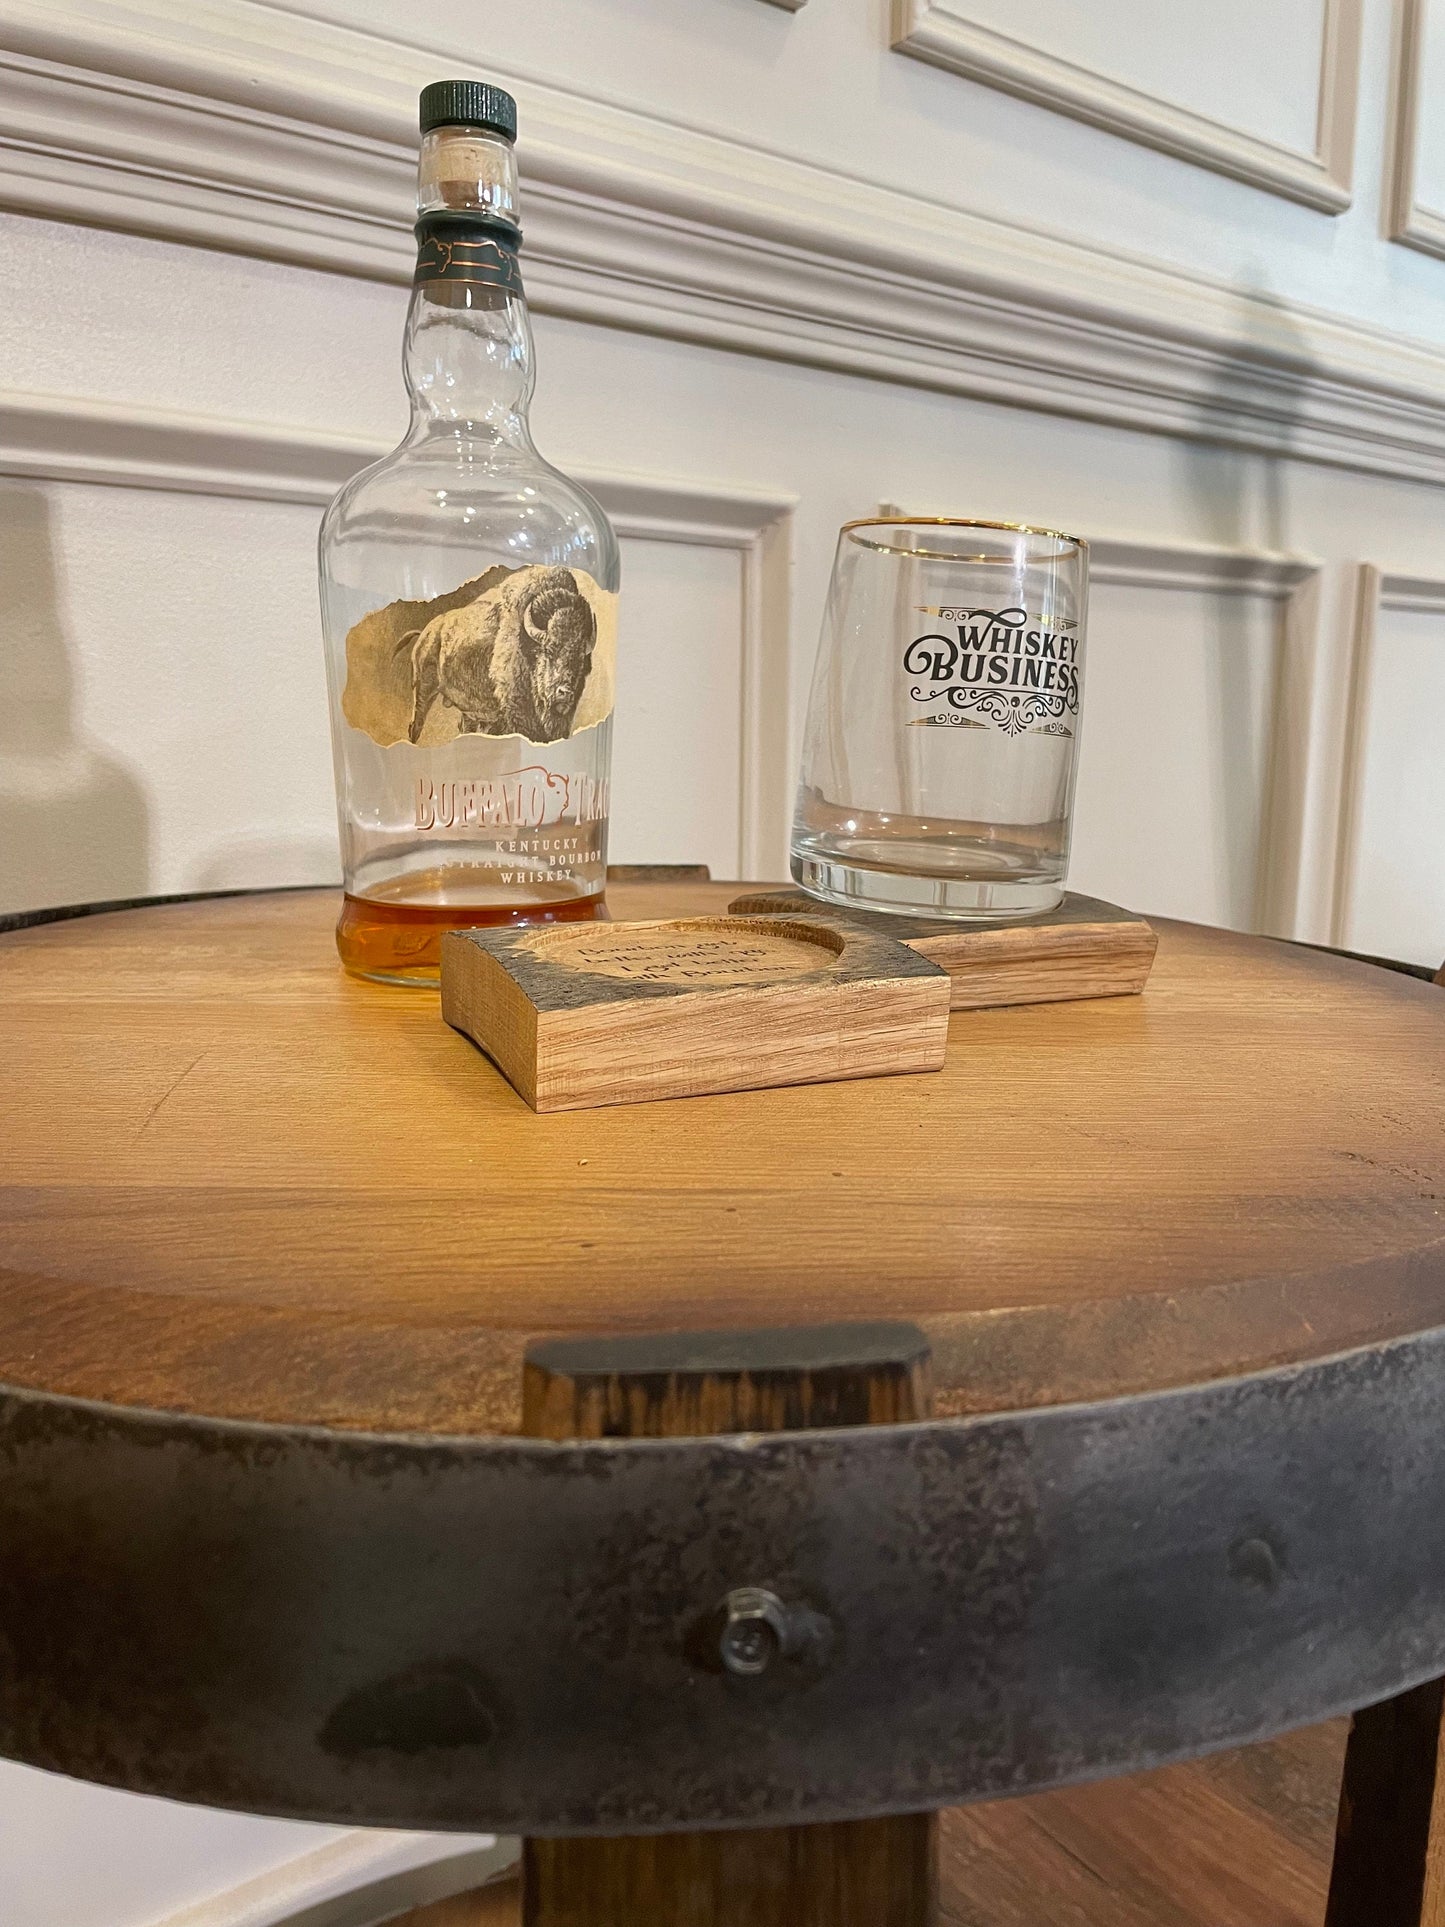 Bourbon Barrel End Table